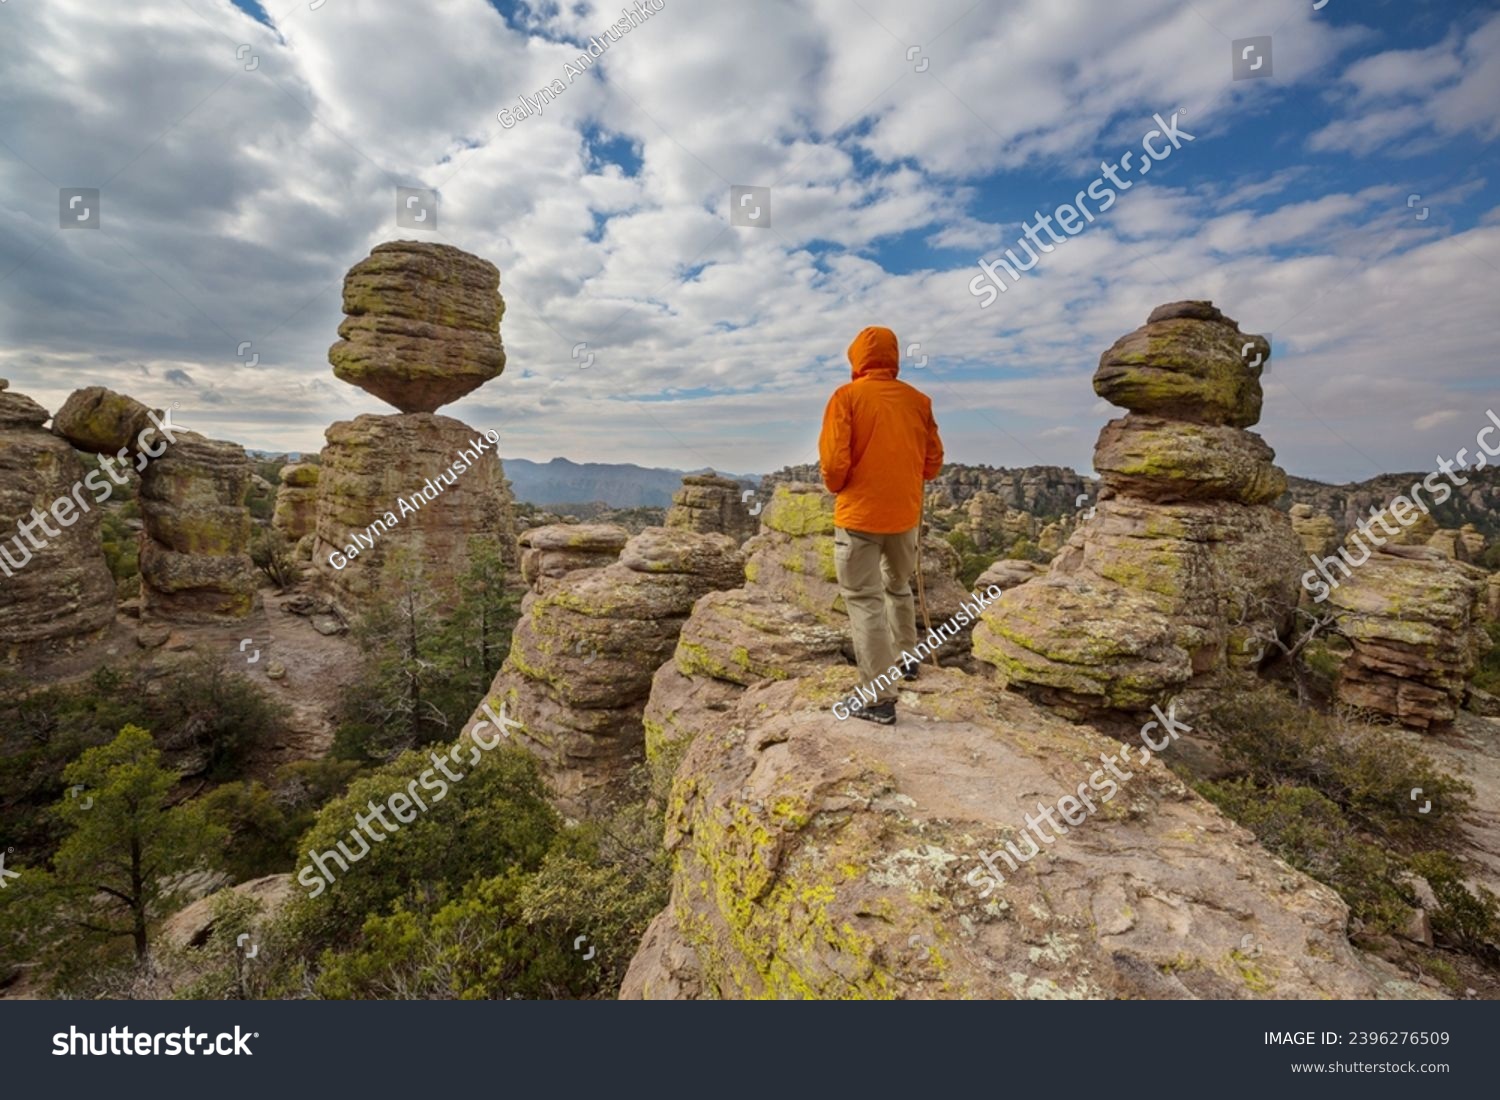 Unusual  landscape at the Chiricahua National Monument, Arizona, USA #2396276509